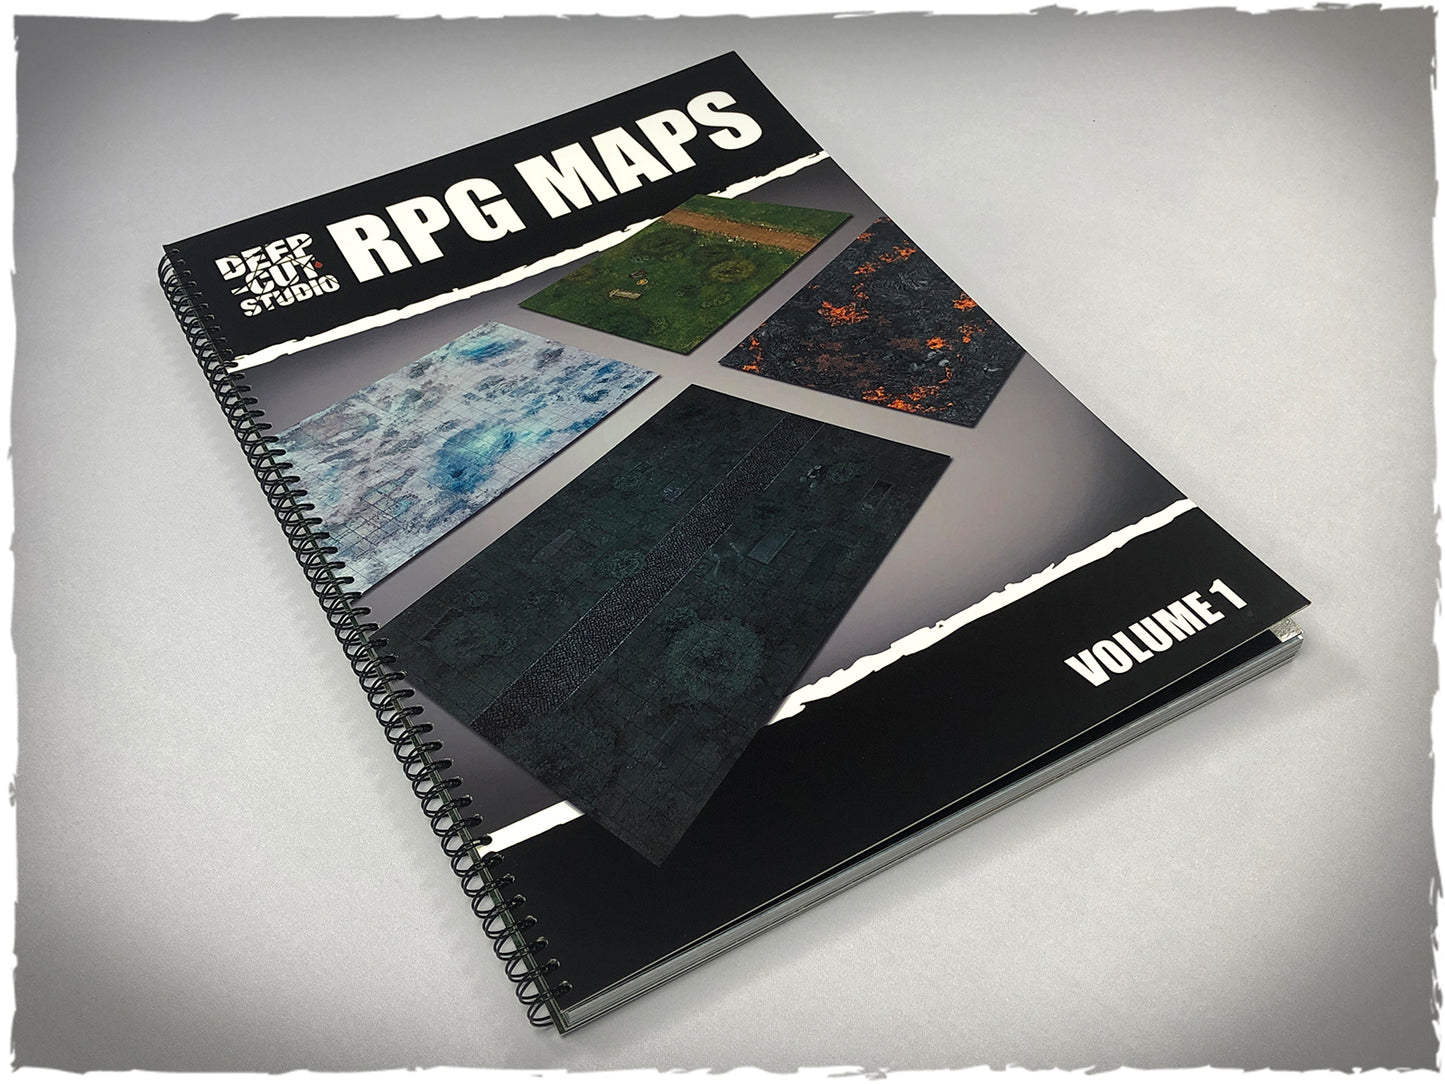 Book of RPG maps vol1